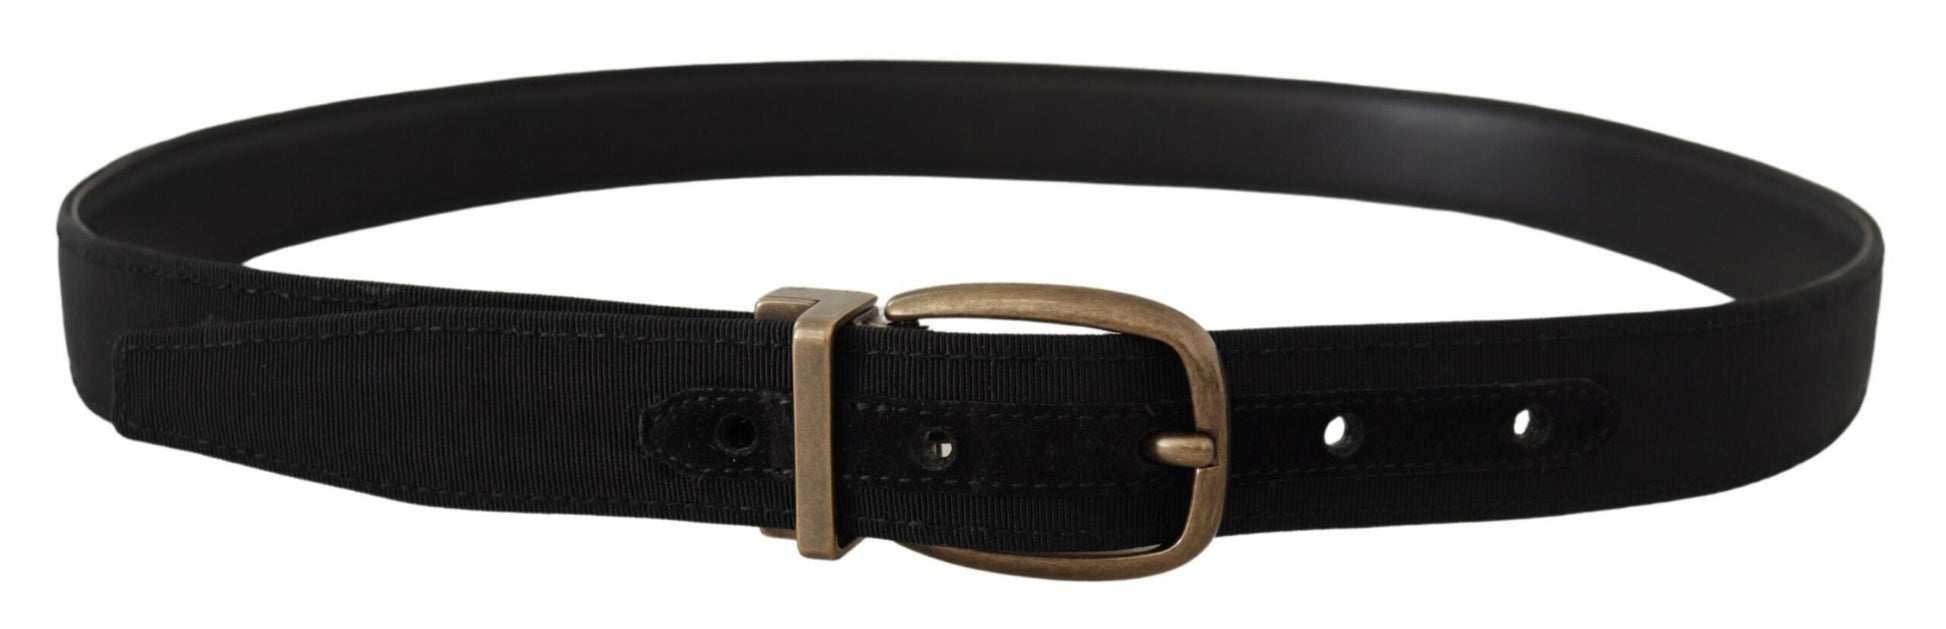 Elegant Grosgrain Leather Belt - Black